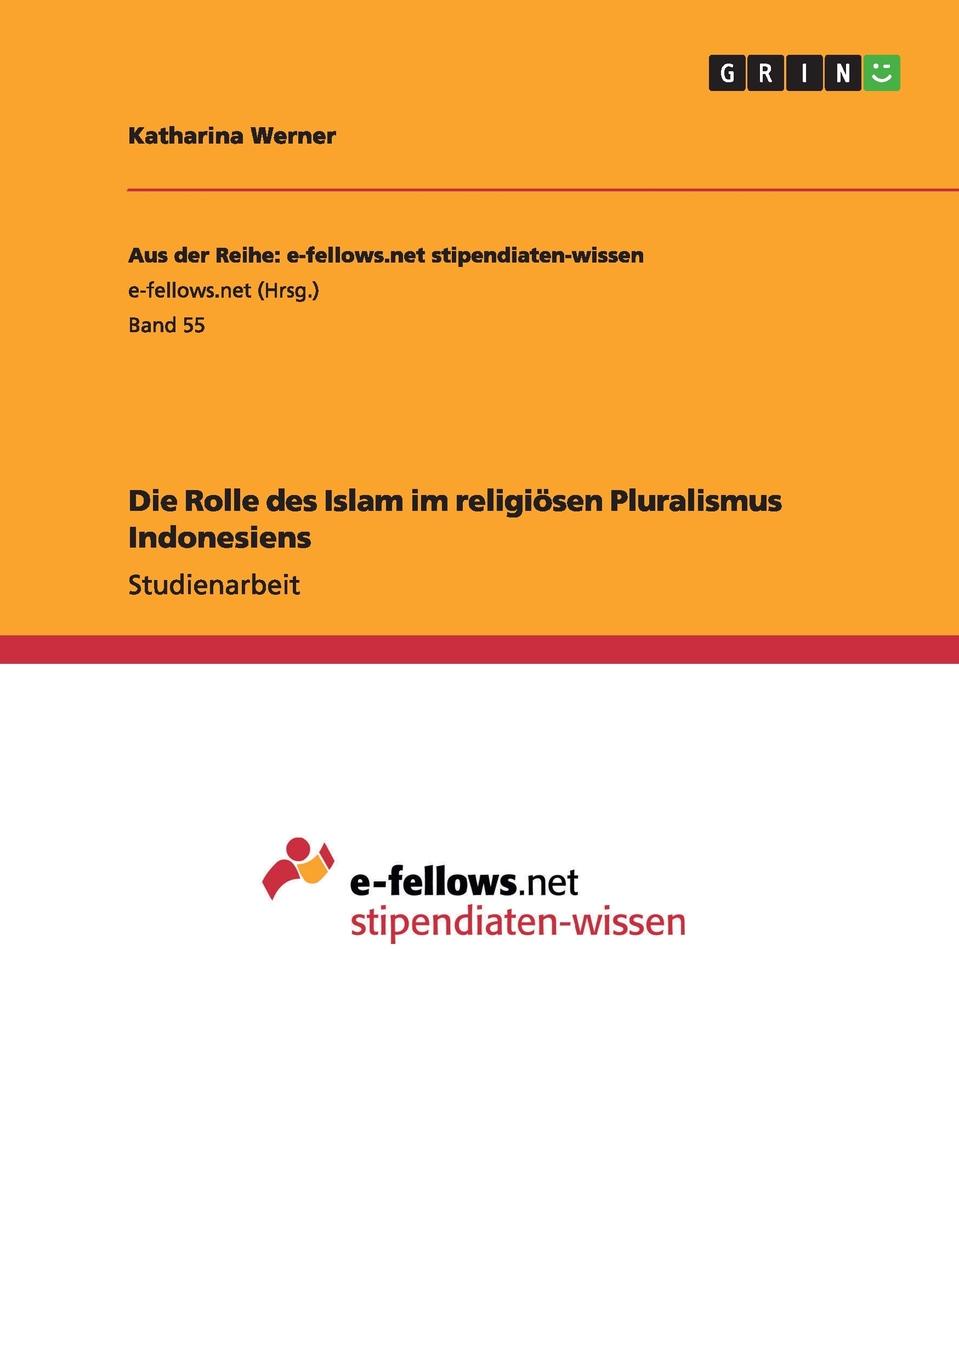 Die Rolle des Islam im religiosen Pluralismus Indonesiens